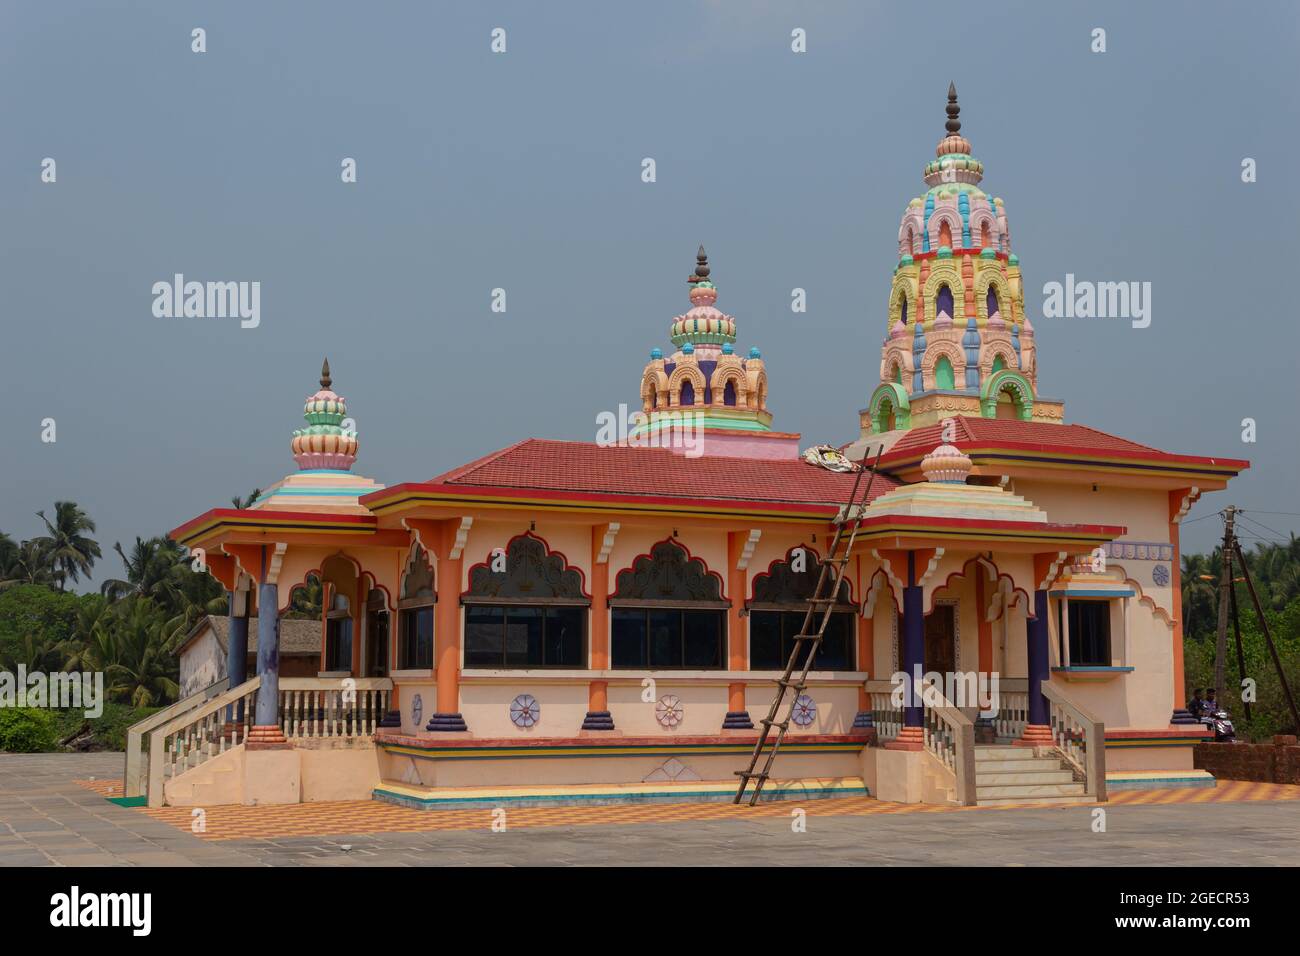 Der schöne Tempel des gottes hanuman am Strand. Stockfoto